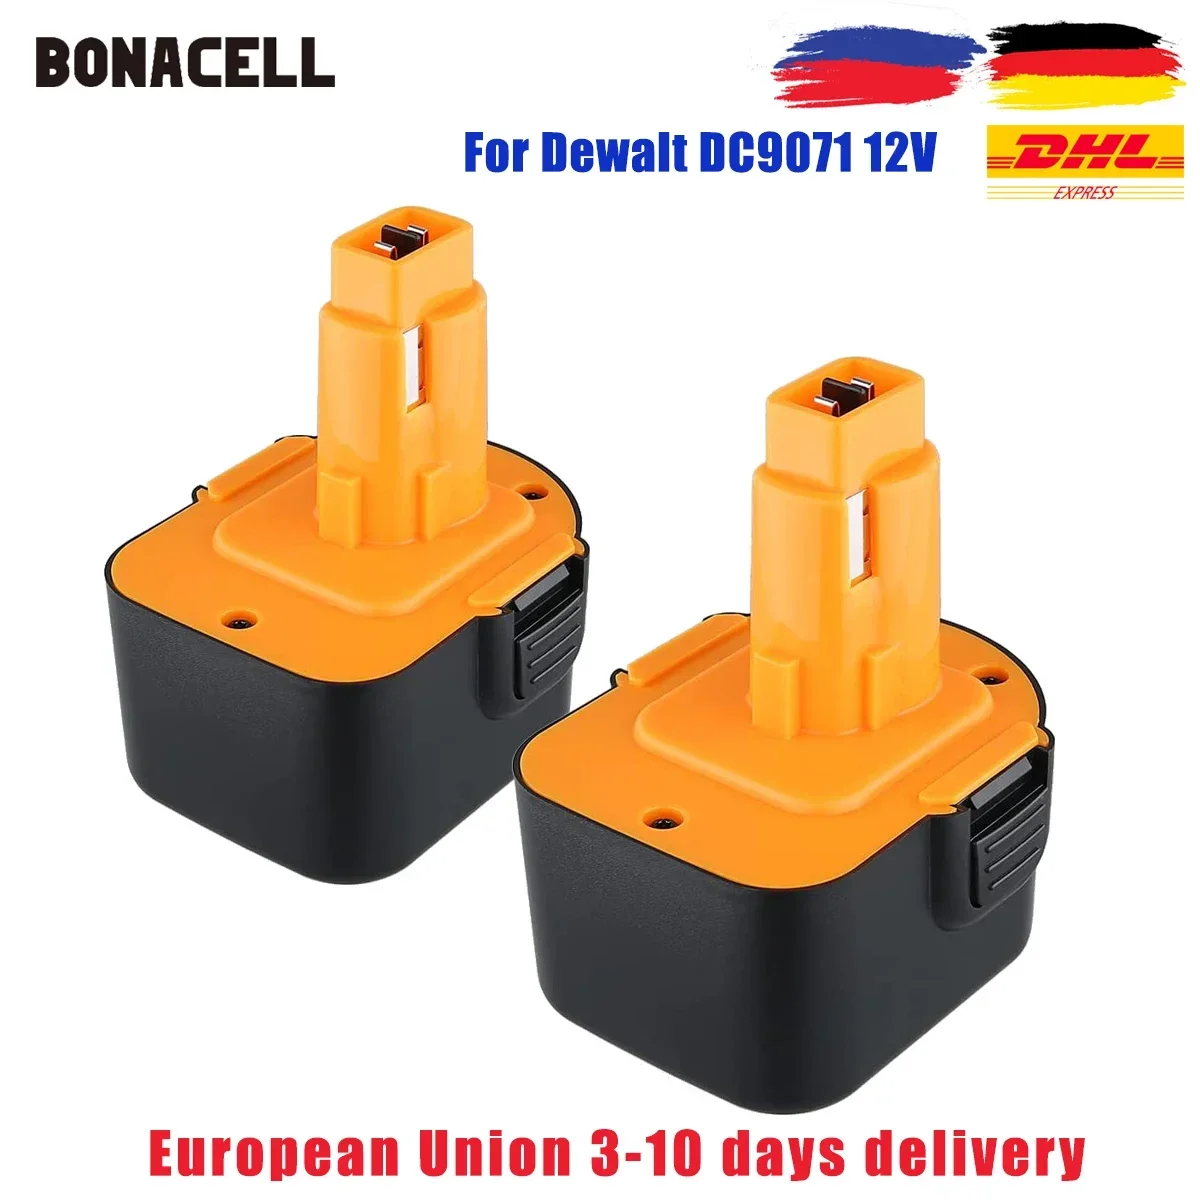 

2 Pack for Dewalt 12V Battery 3.5Ah DC9071 DW9072 DW9071 DE9074 DE9037 DE9071 DE9072 DE9075 12 Volt Battery Cordless Power Tool